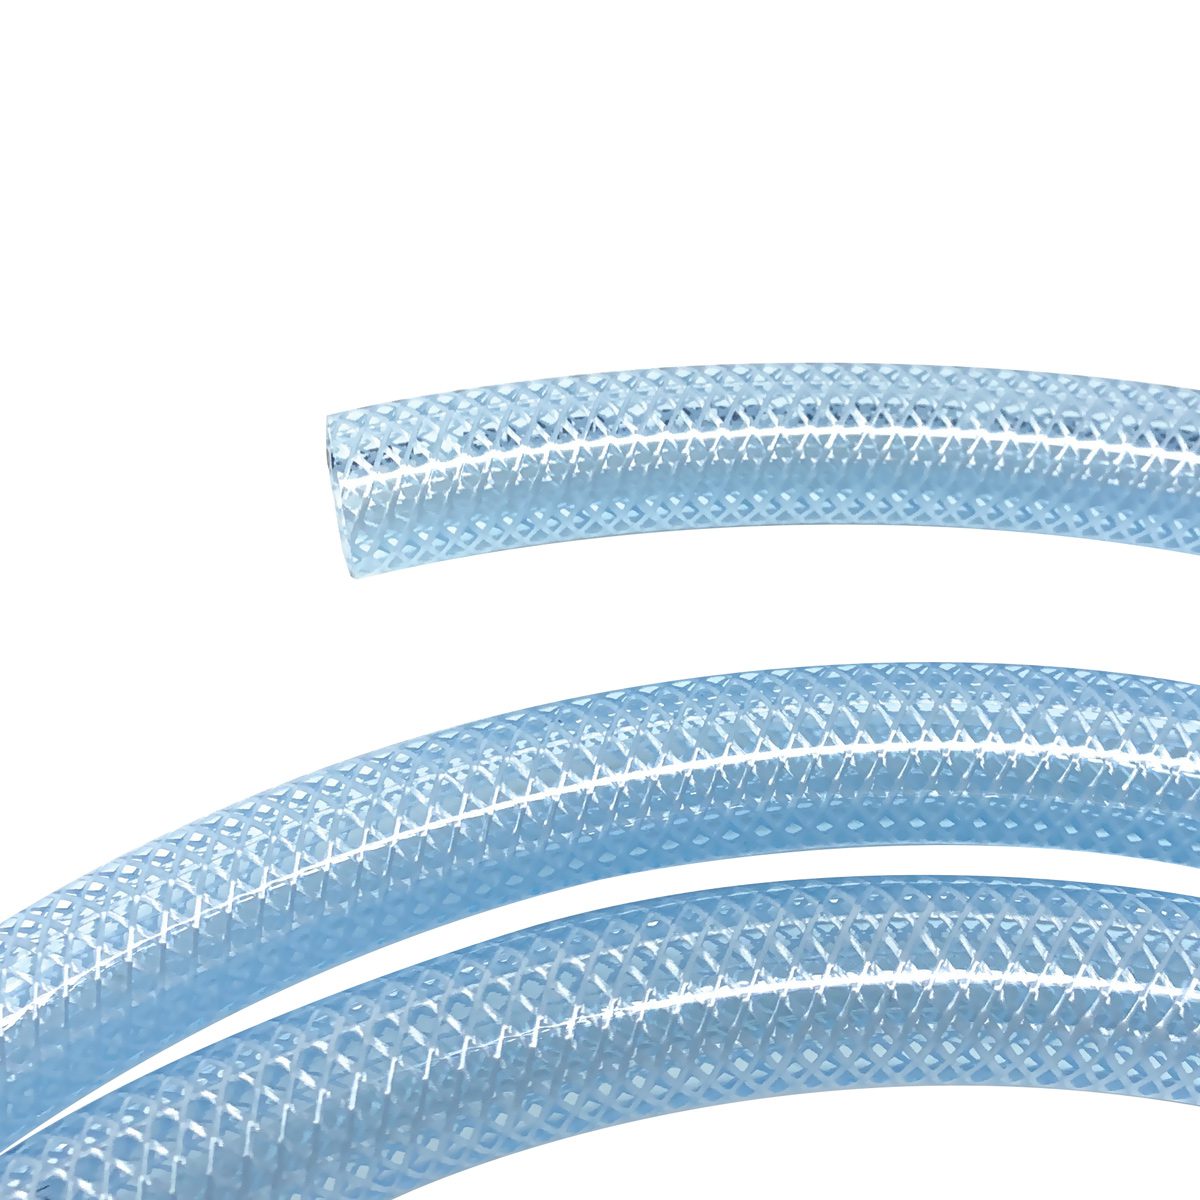 Gloxco Clear Braided PVC Tube, Food Grade Hose, 1/2 ID, 50 Ft Length